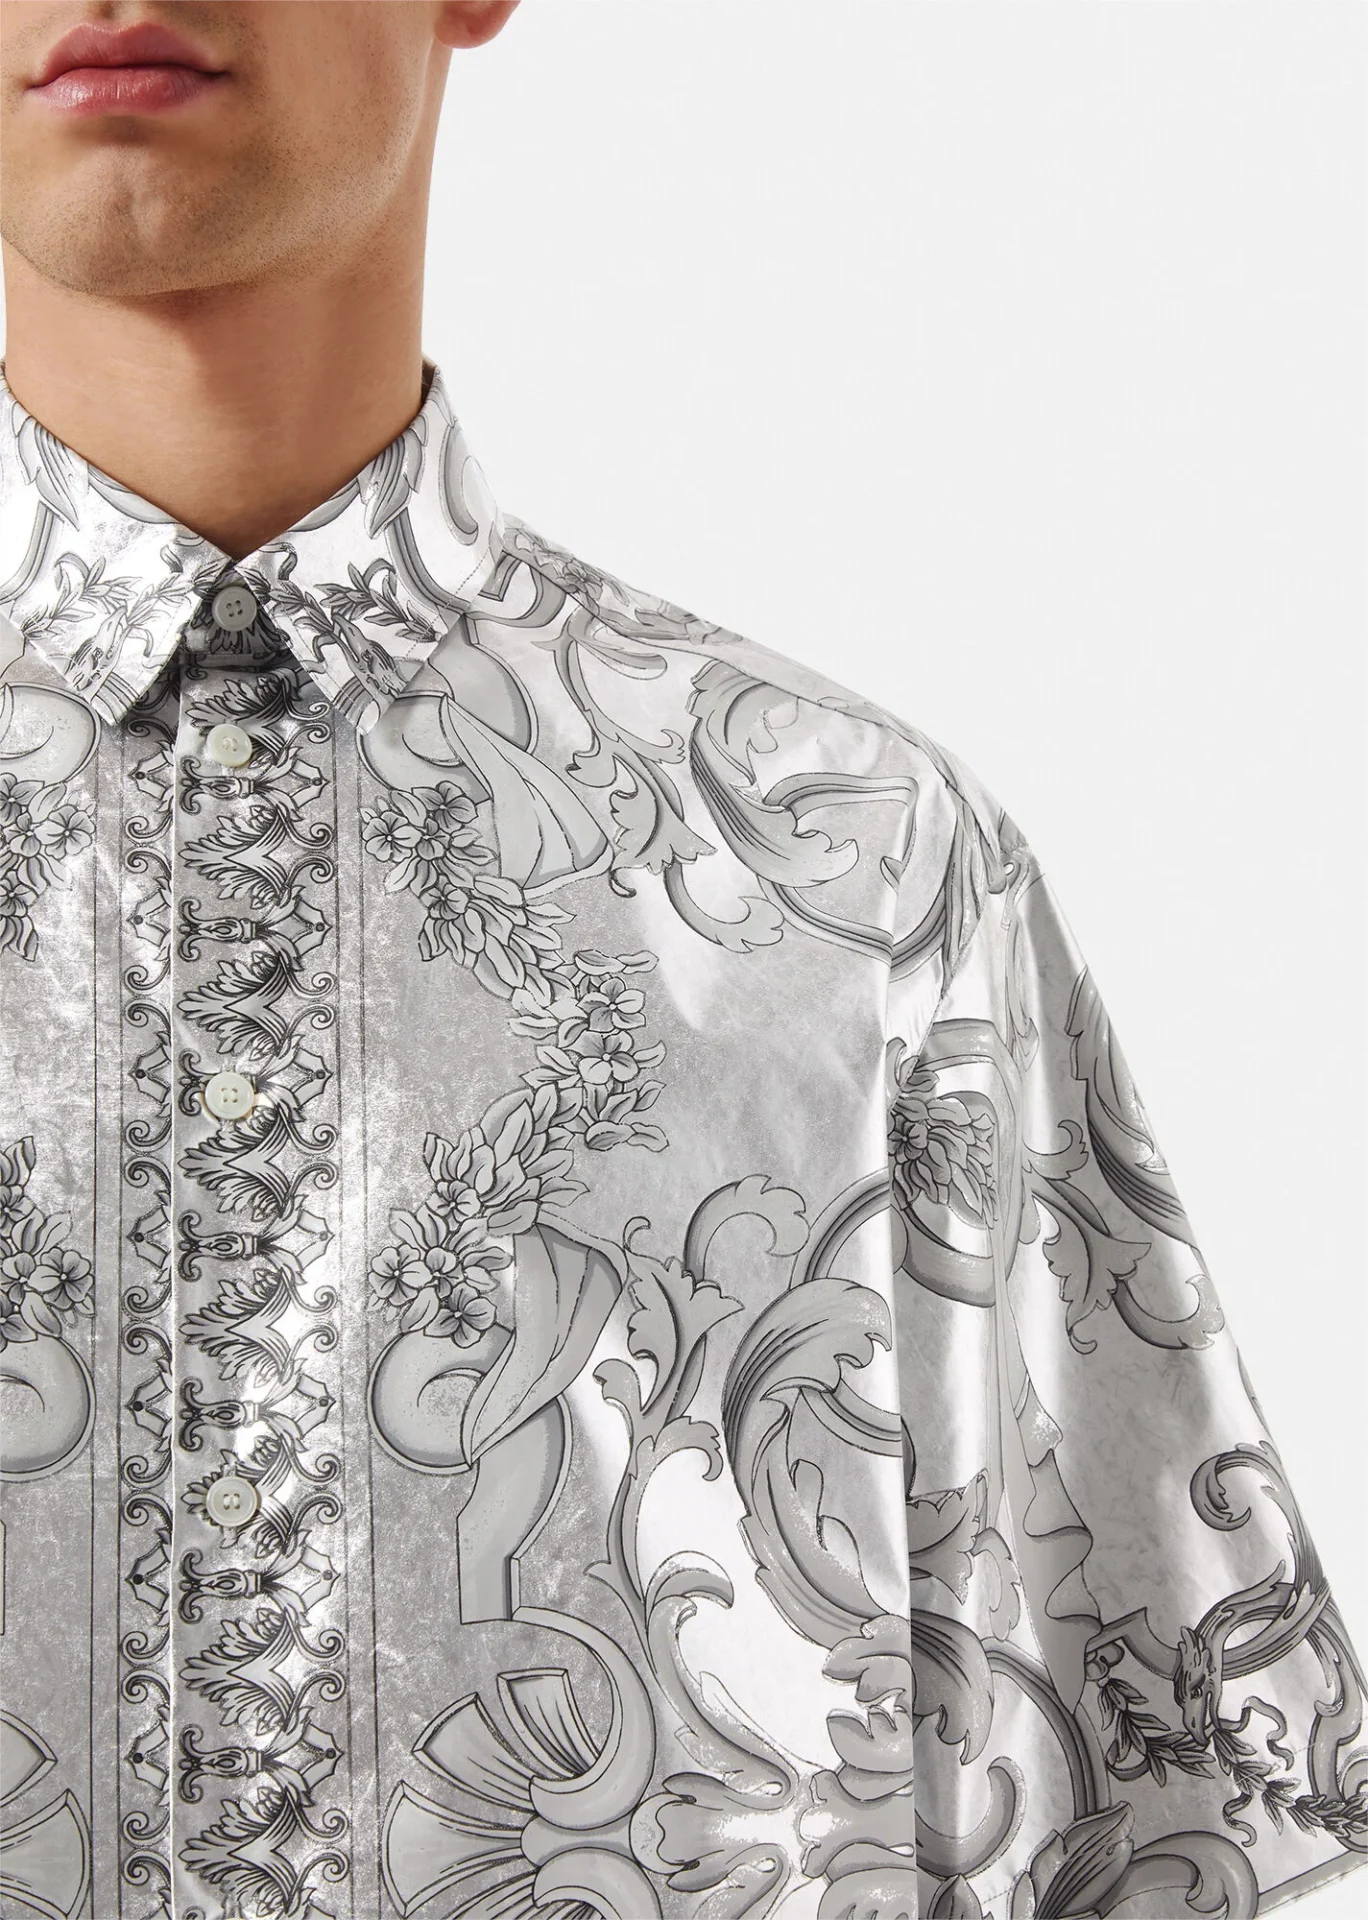 A close up of a versace silver silk baroque shirt